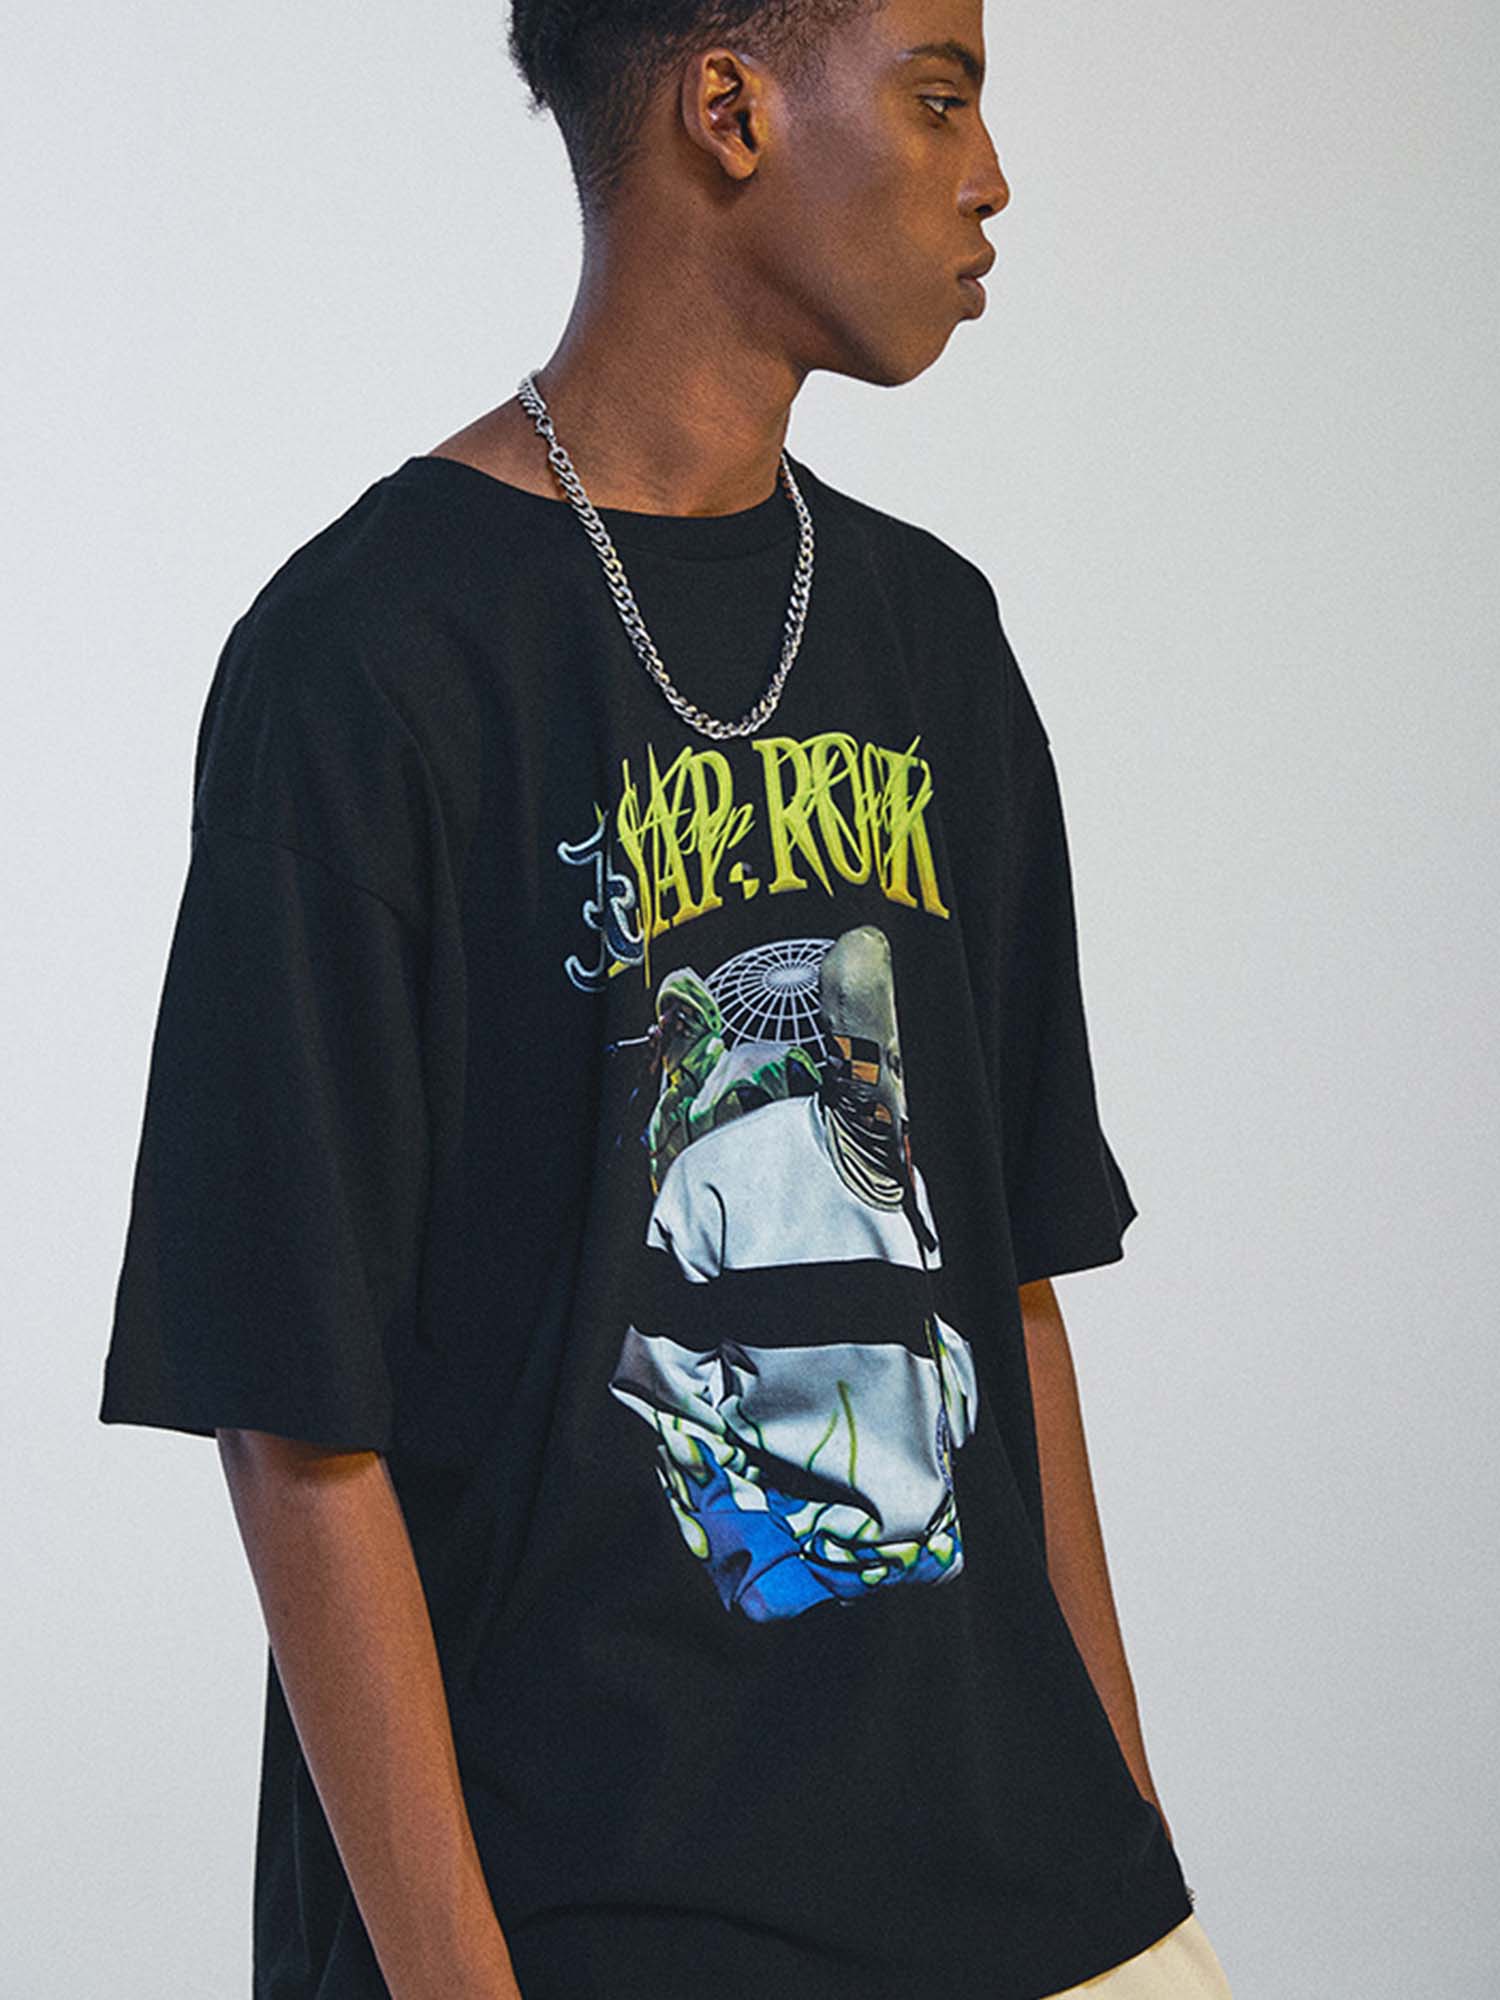 JUSTNOTAG Hip-Hop Rapper Print Cotton Short Sleeve Tee